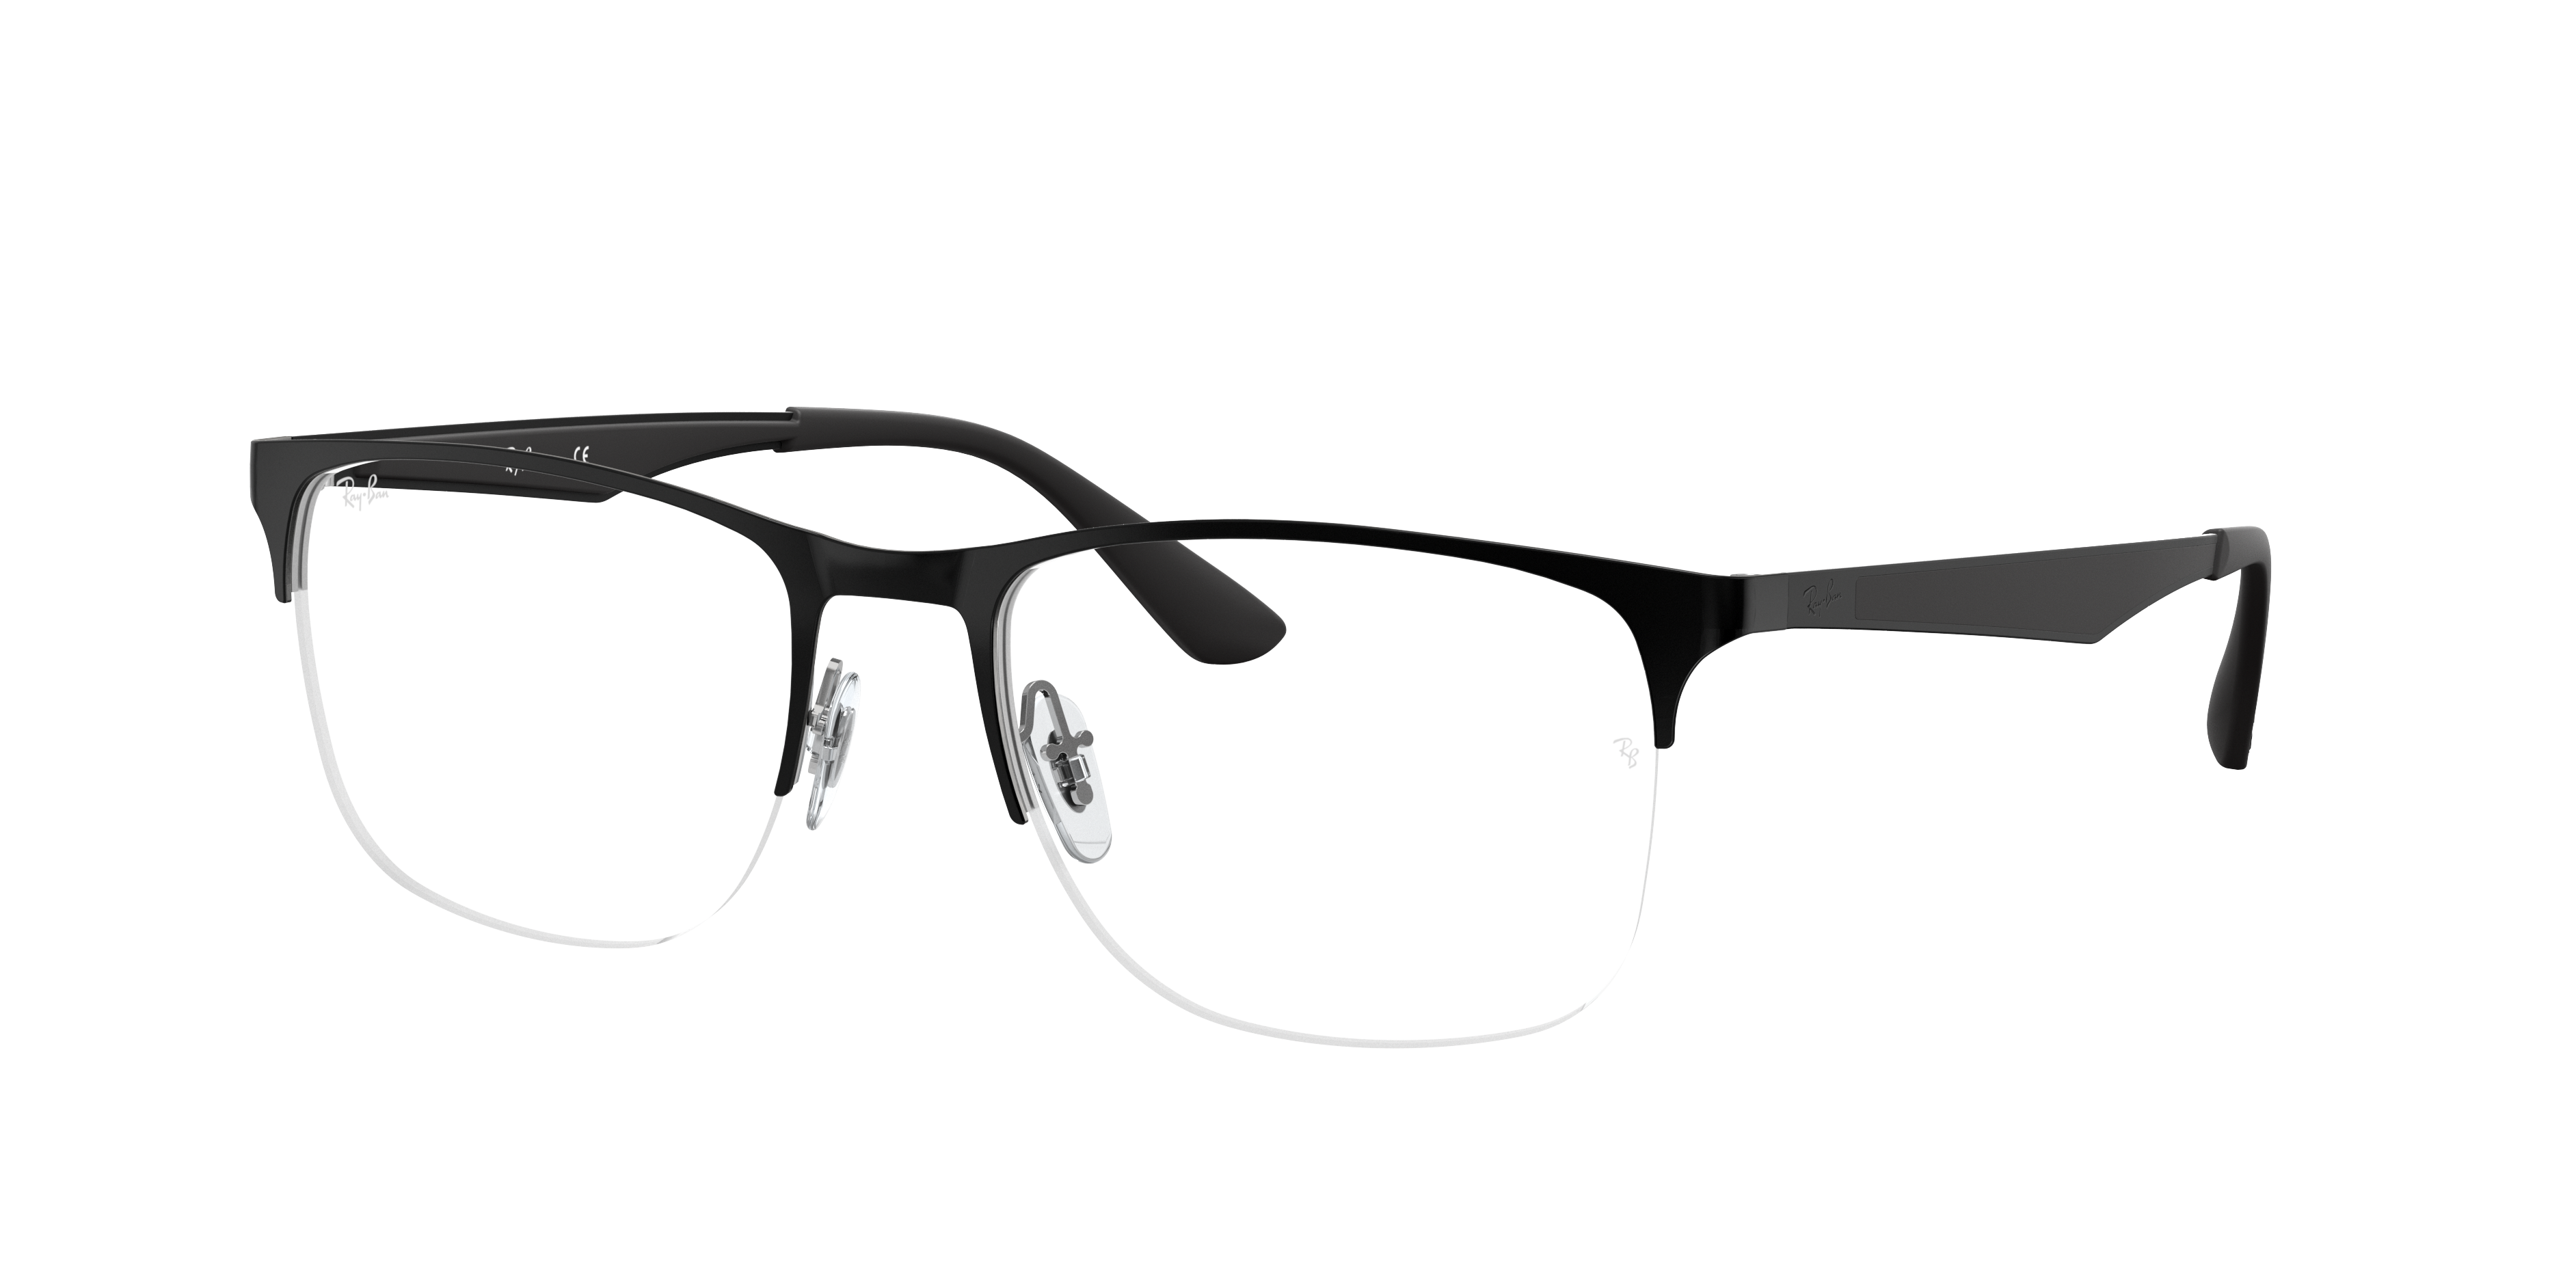 Rb6362 Eyeglasses with Black Frame - RB6362 | Ray-Ban®